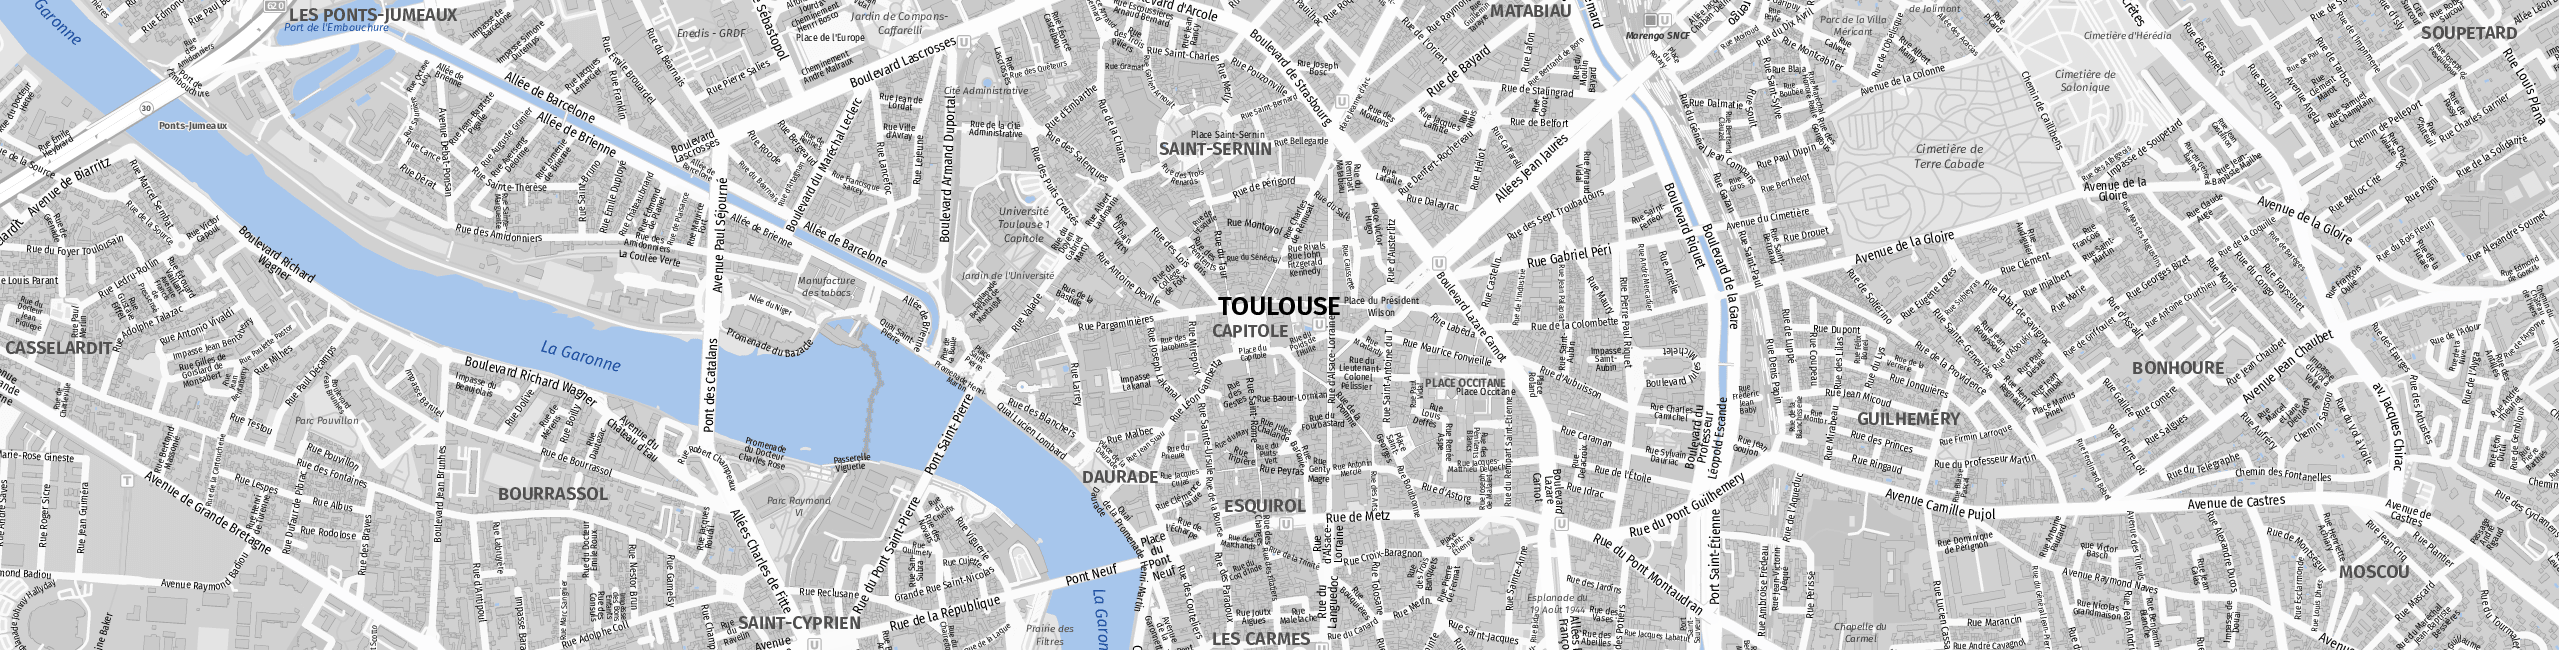 Stadtplan Toulouse zum Downloaden.